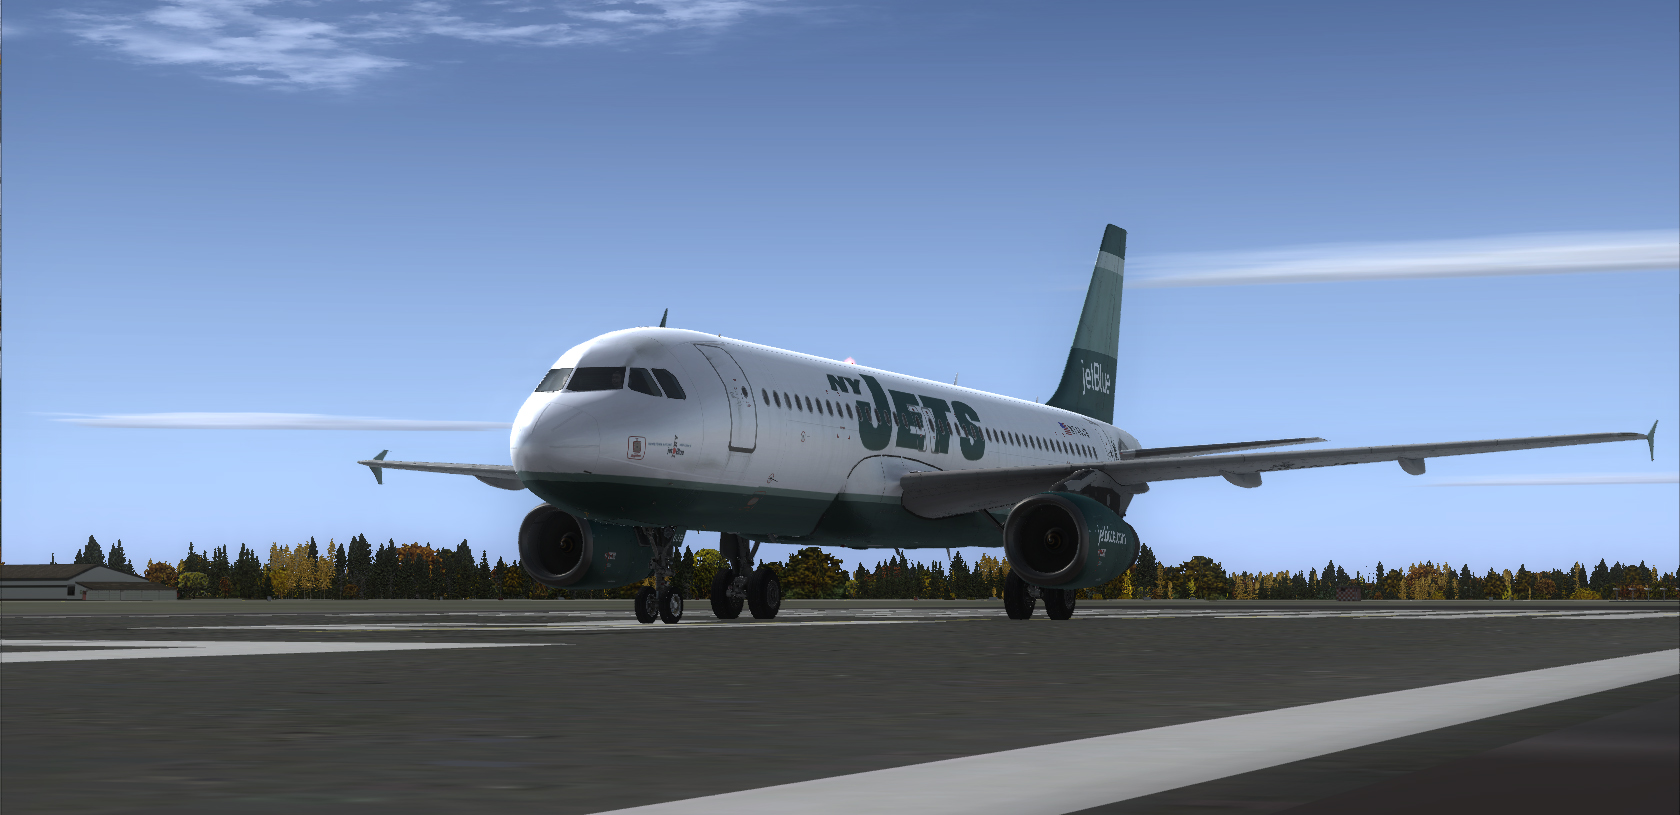 More information about "JetBlue NJ Jets A320 IAE"